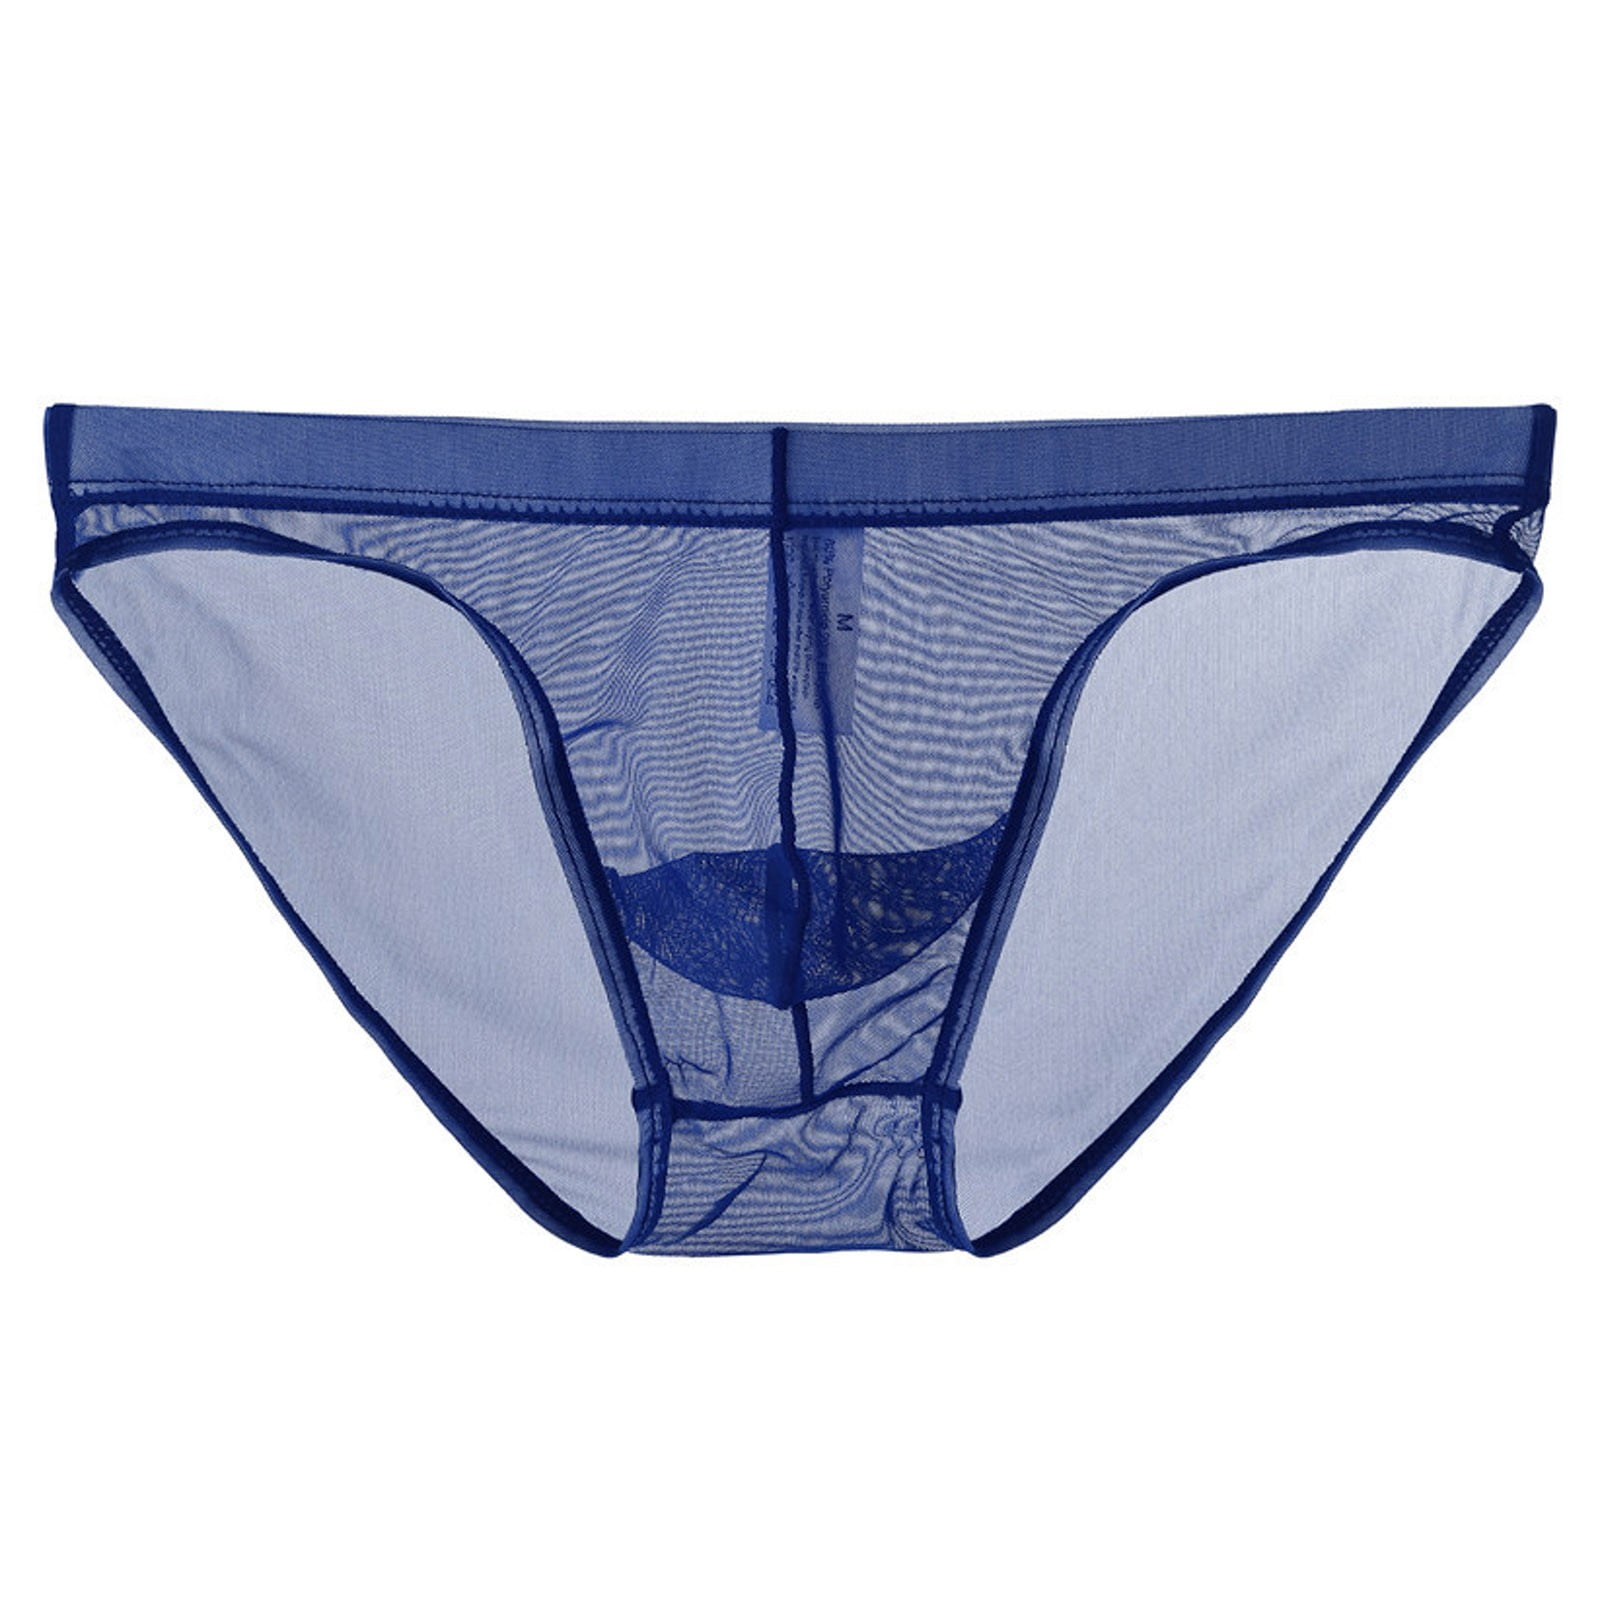 kpoplk Men's Underwear Mens Mesh Bikini Brief Thong Design High Cut Low  Rise Boxer Style Underwear(White,M) 